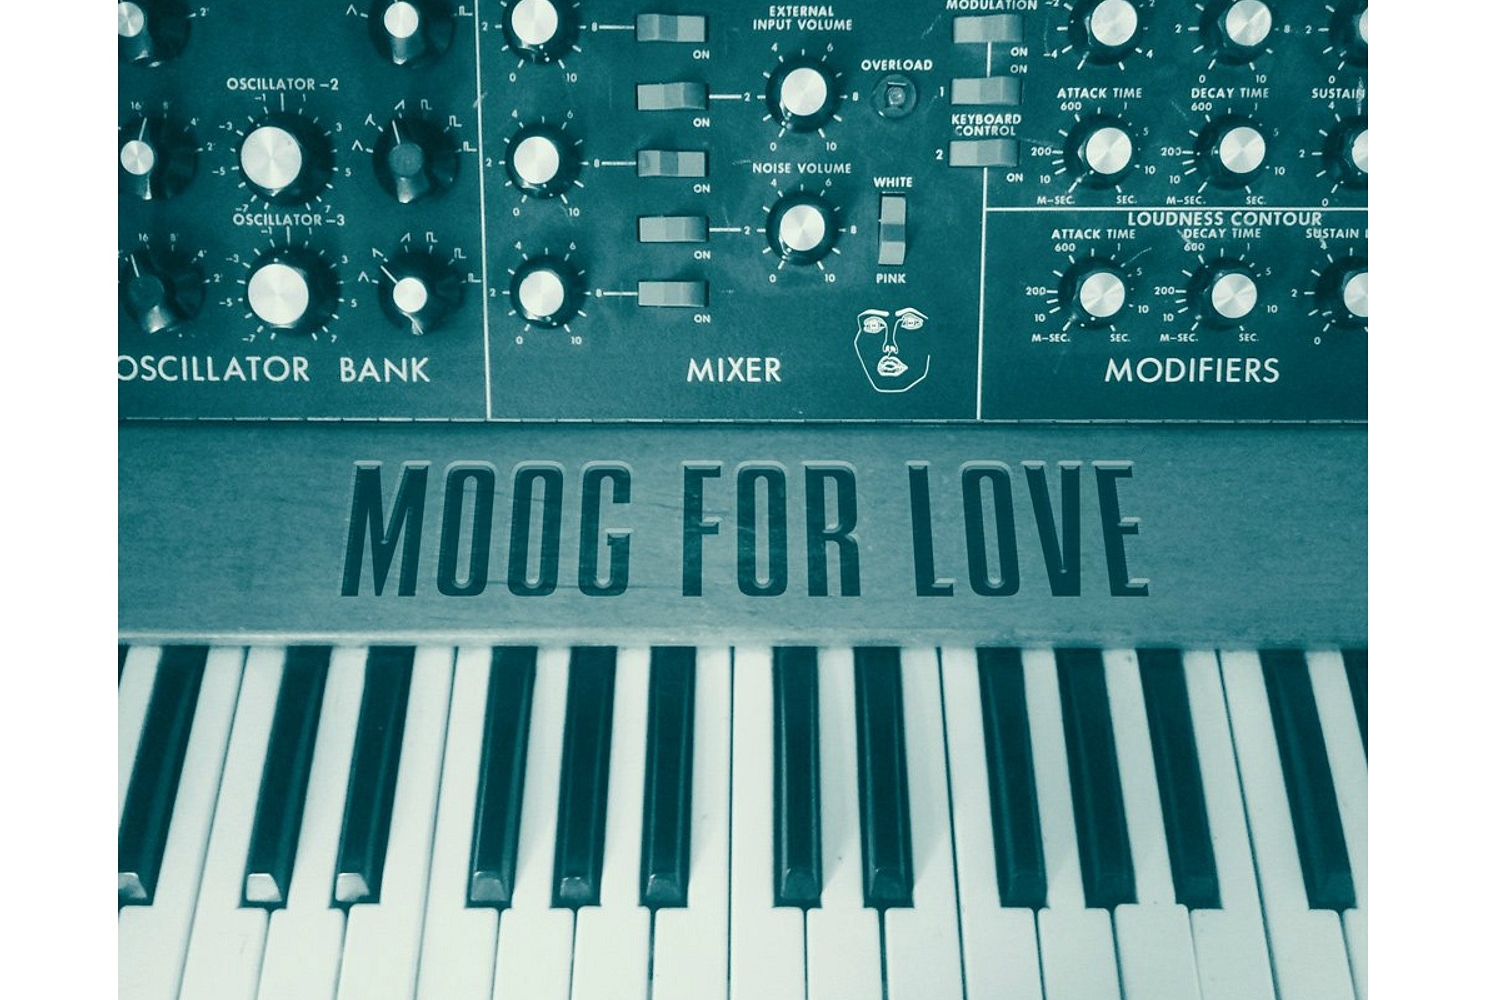 Disclosure - Moog for Love